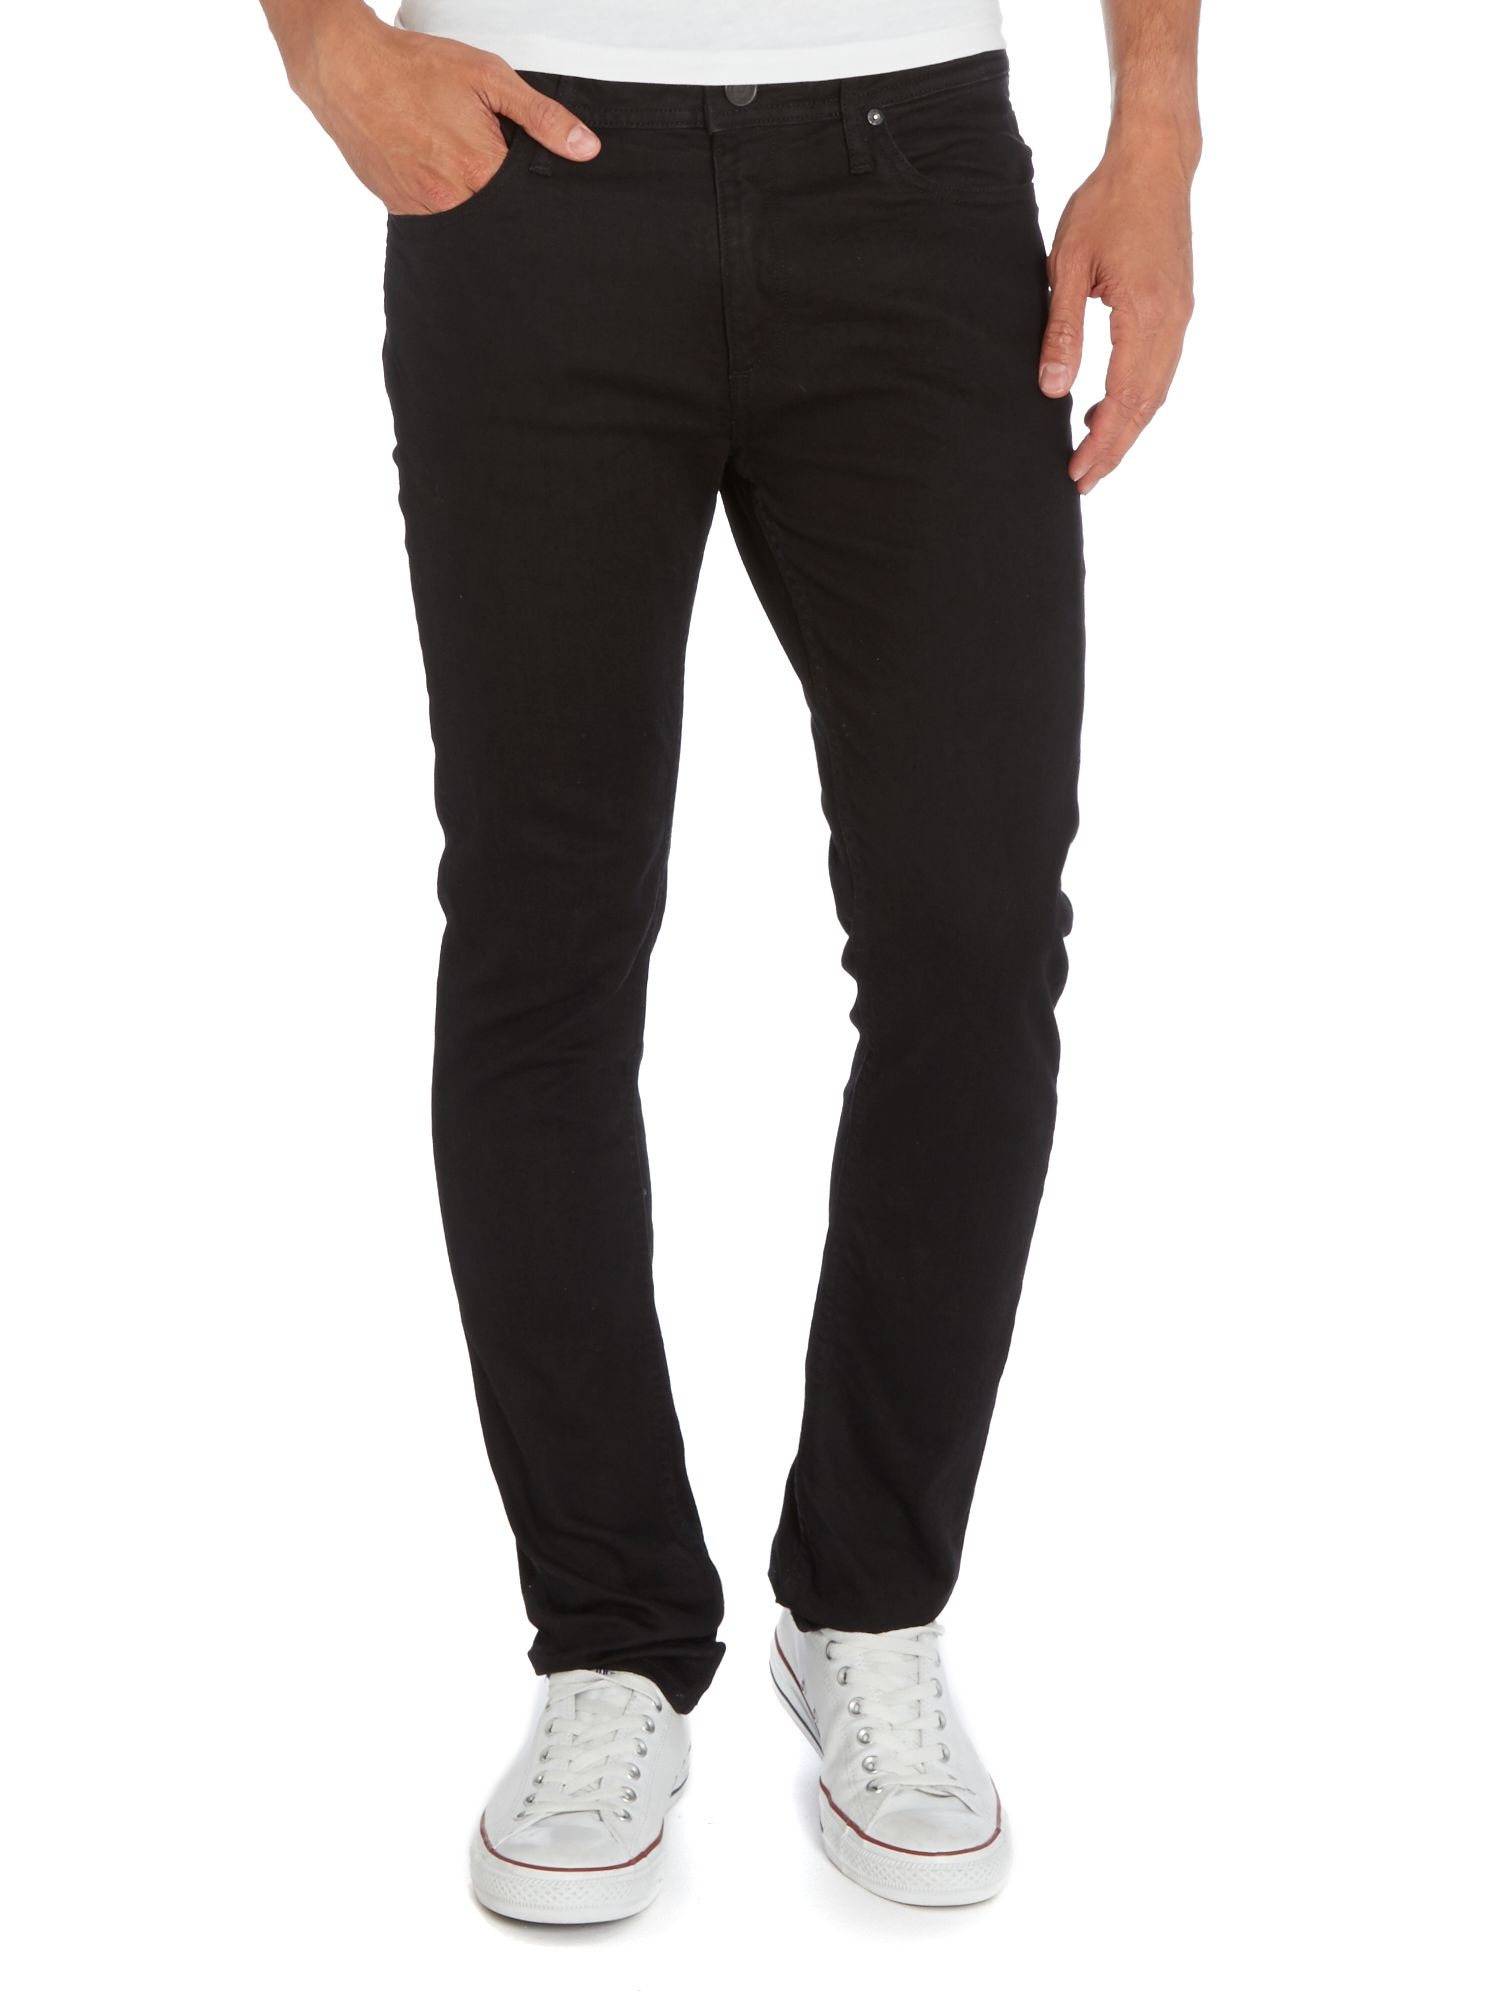 Jack & Jones Skinny Fit Ben Original Jeans in Black for Men - Lyst